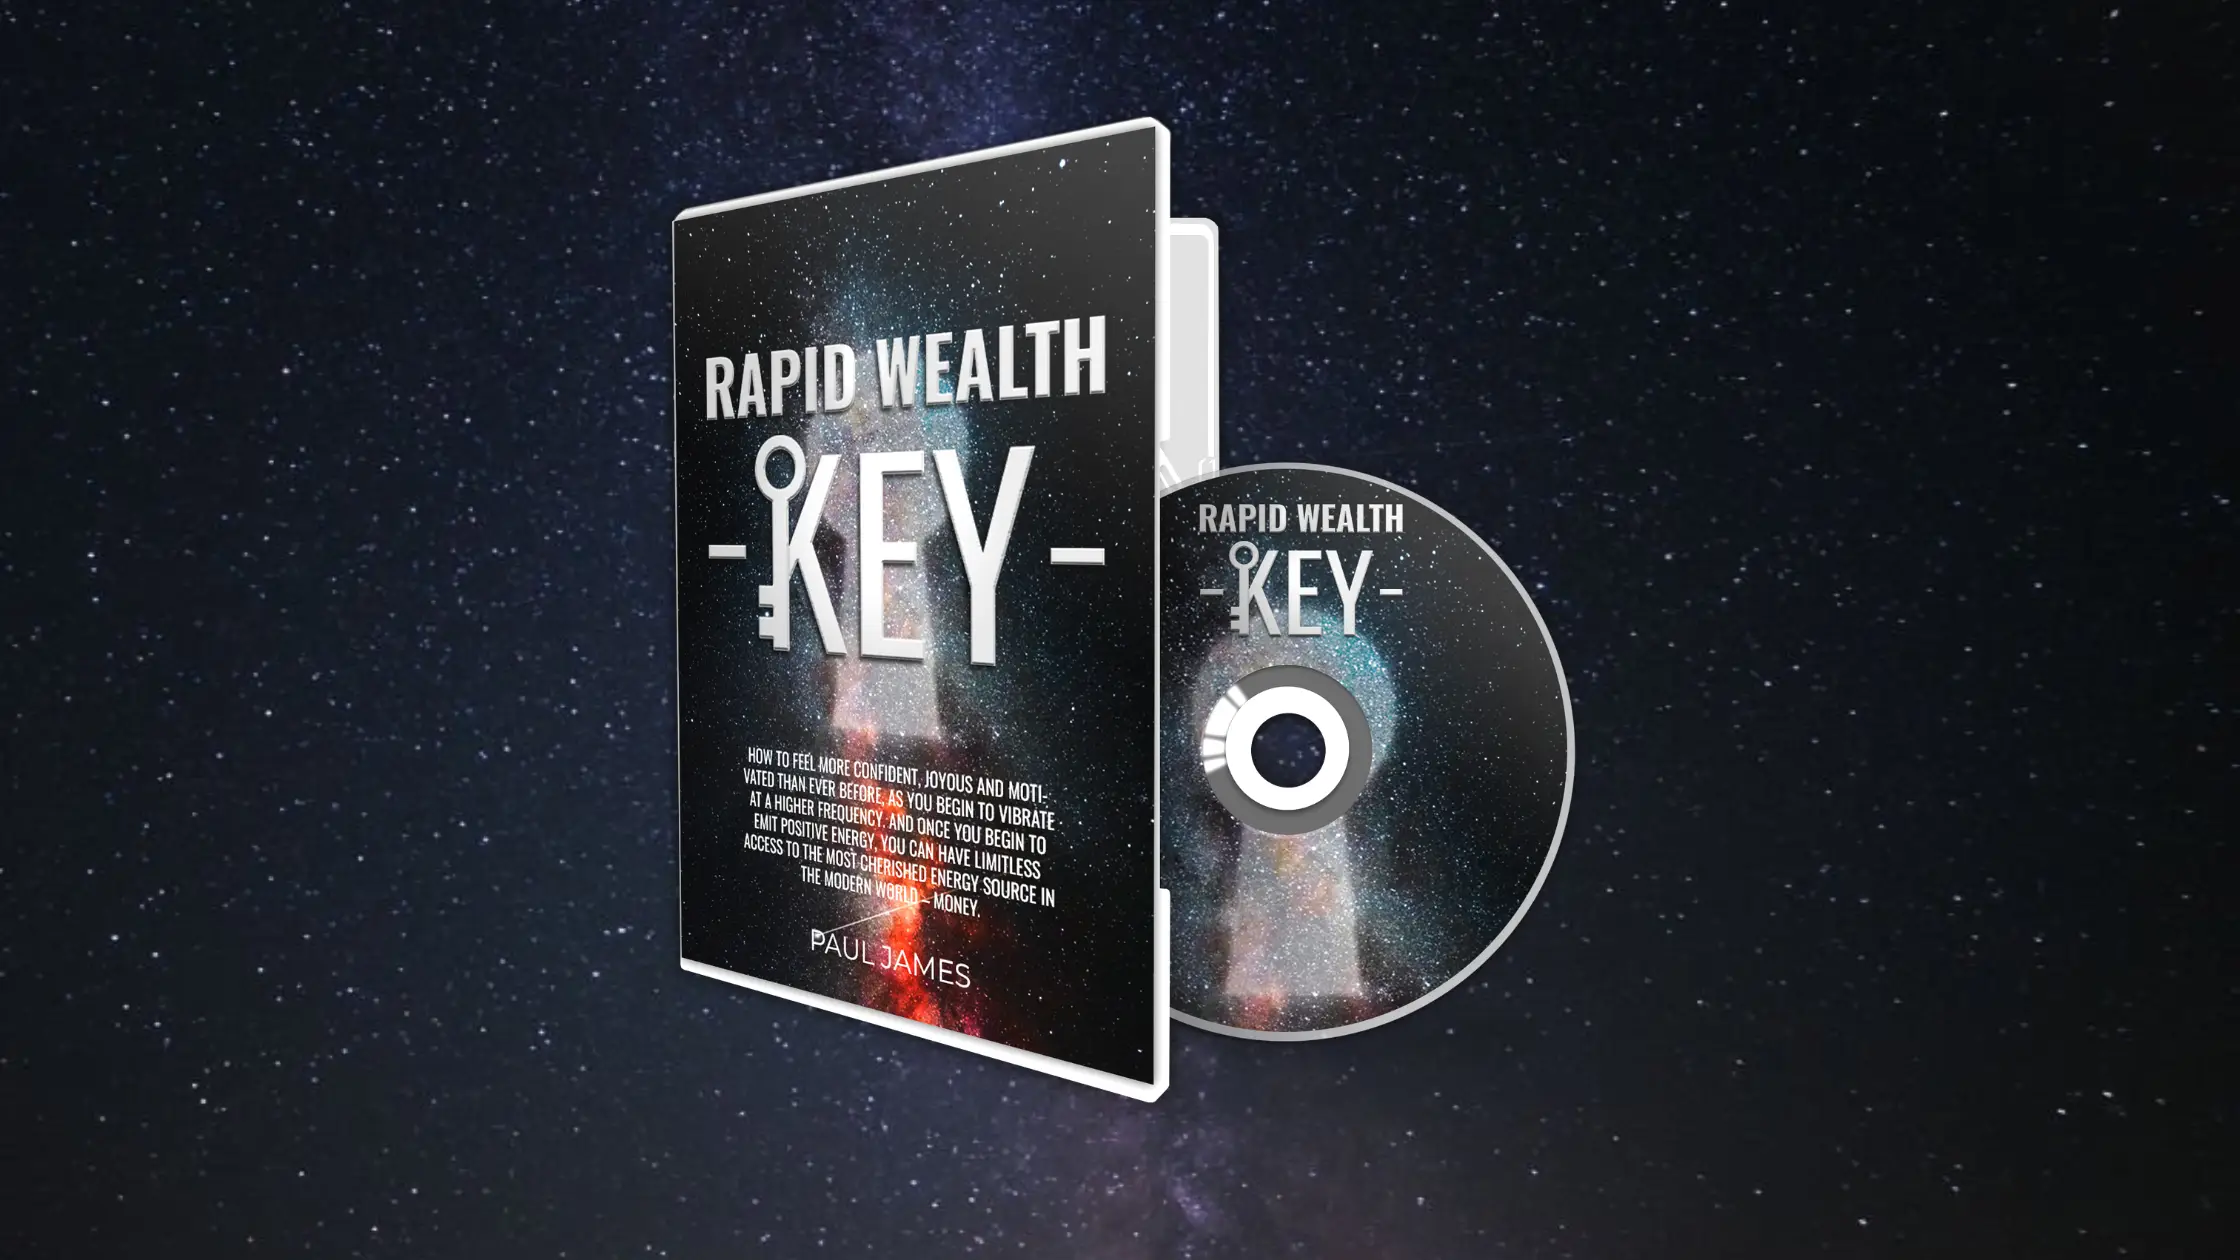 Rapid Wealth Key Reviews